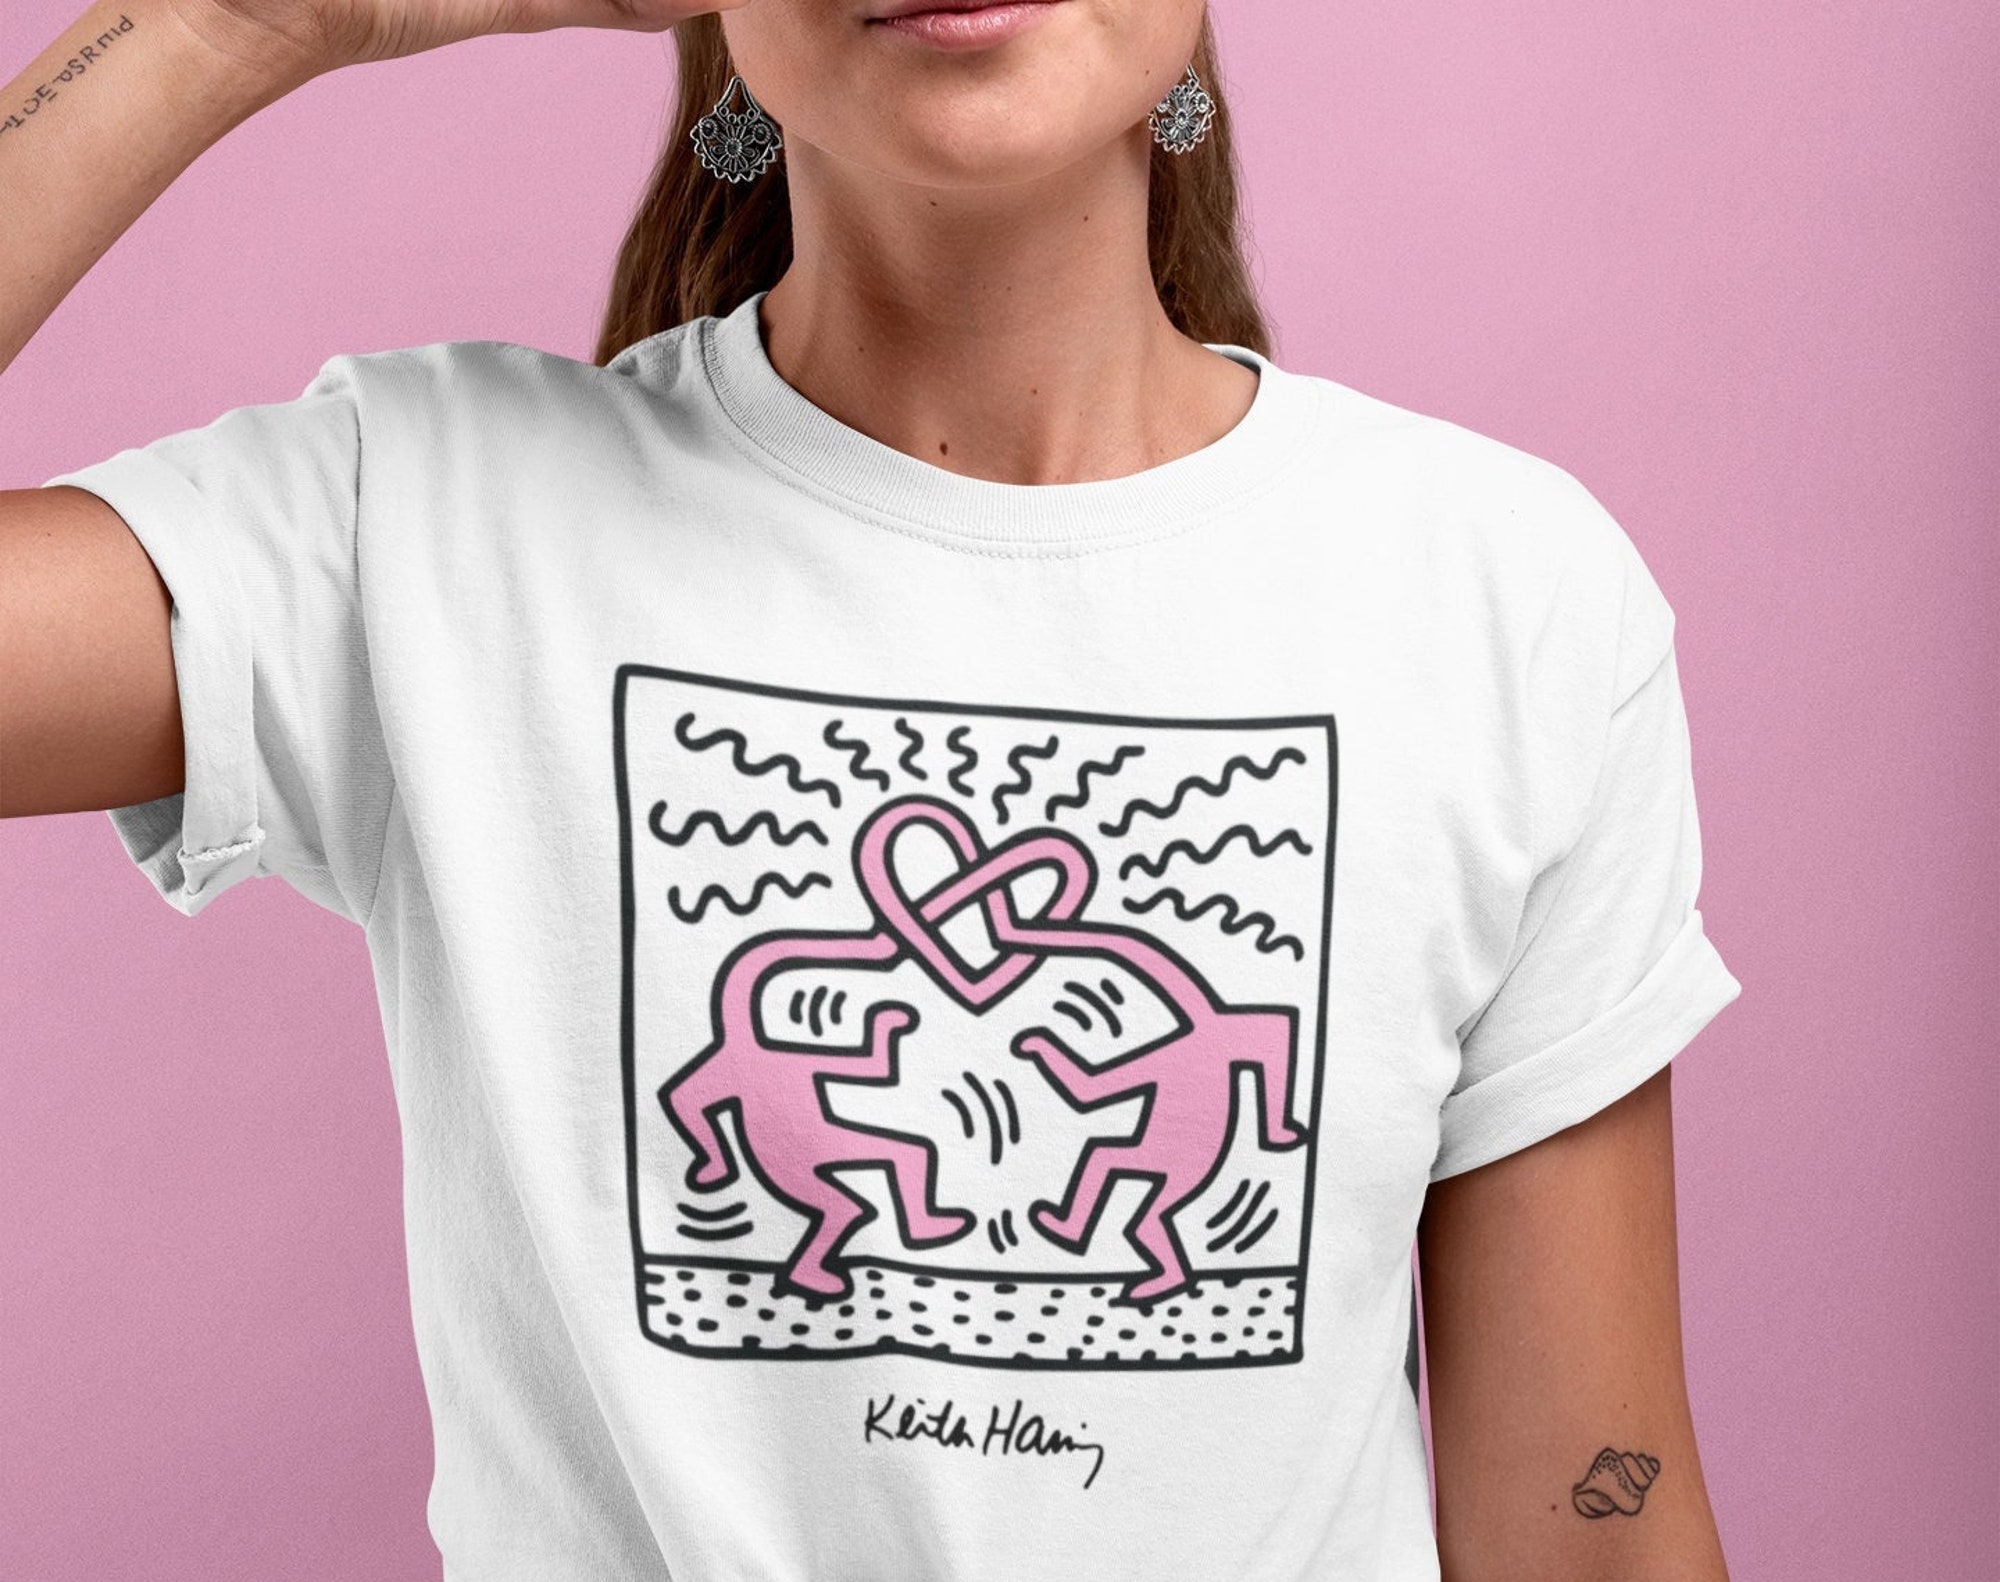 Keith Haring Shirt, Pop art t-shirt, men heart tshirt